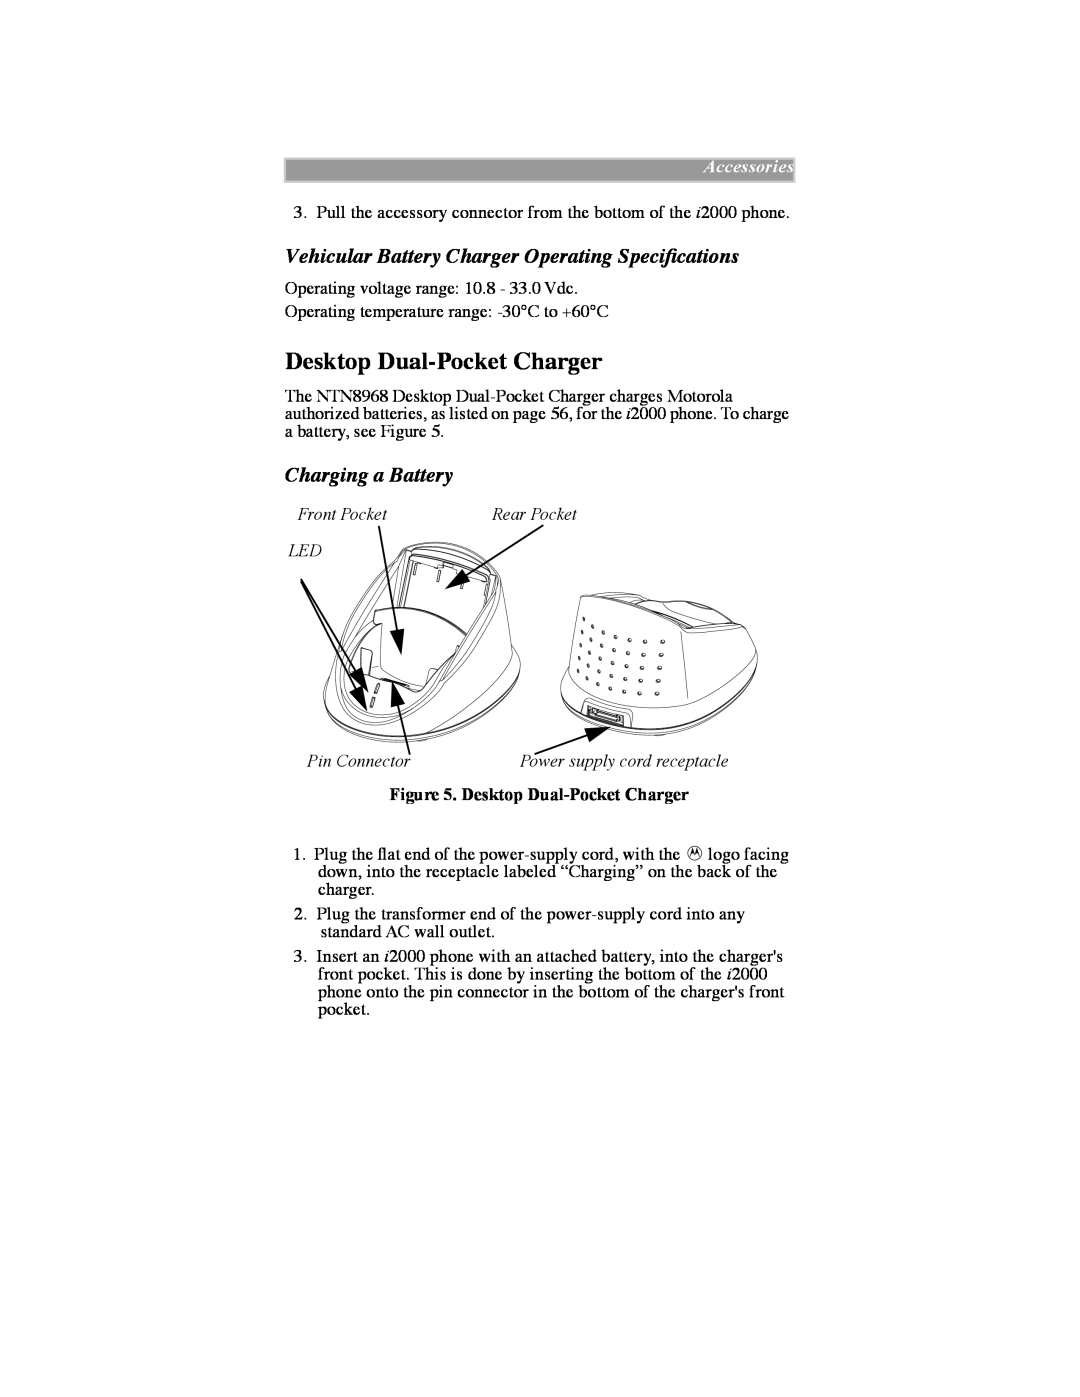 Motorola iDEN manual Desktop Dual-Pocket Charger, Vehicular Battery Charger Operating SpeciÞcations, Charging a Battery 